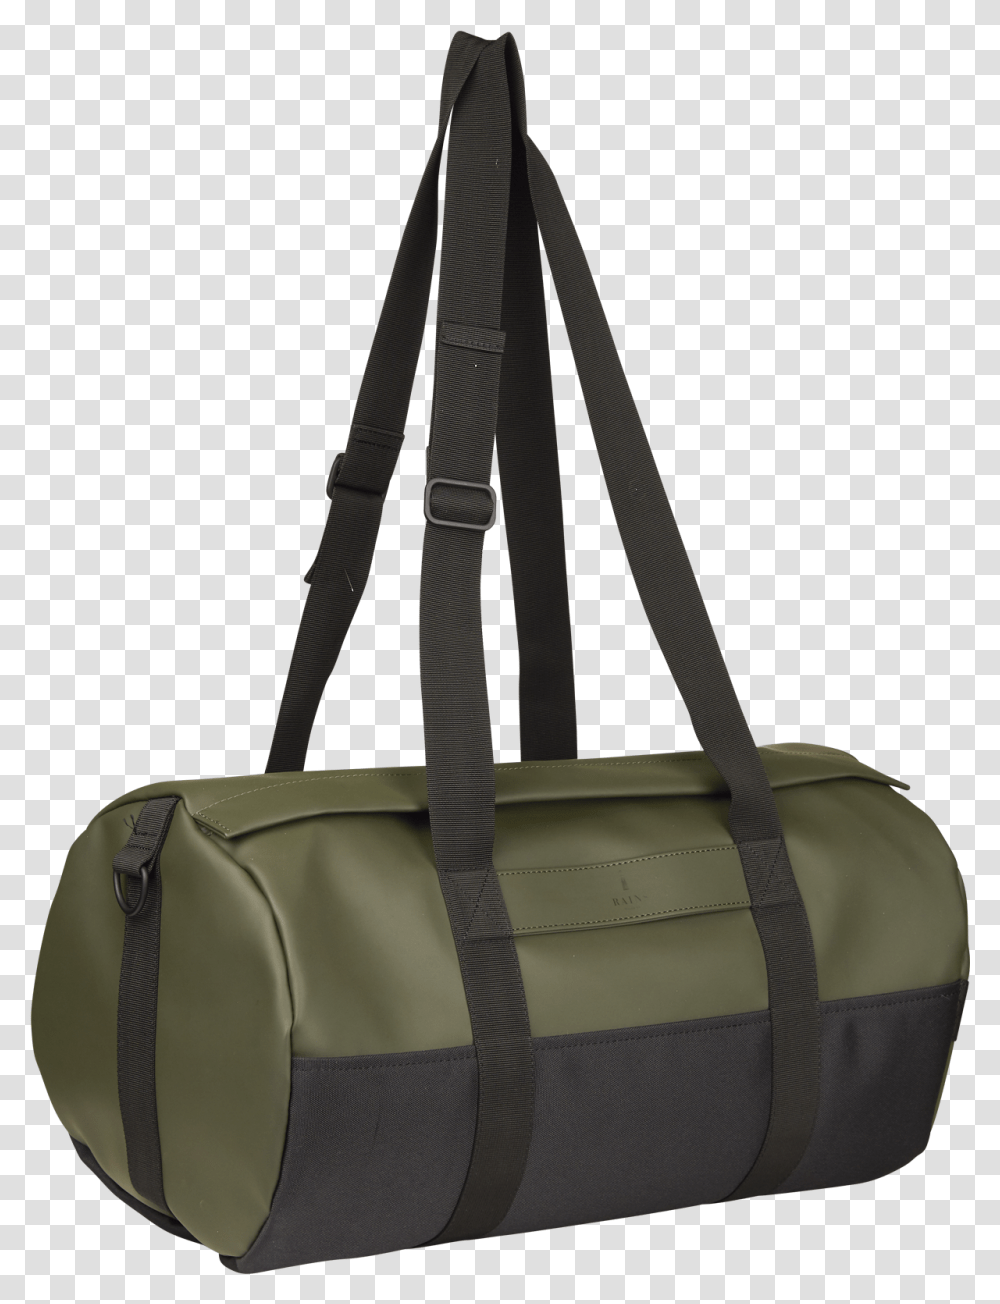 Small Travel Bags For Ladies Duffel Bag, Tote Bag, Accessories, Accessory, Handbag Transparent Png